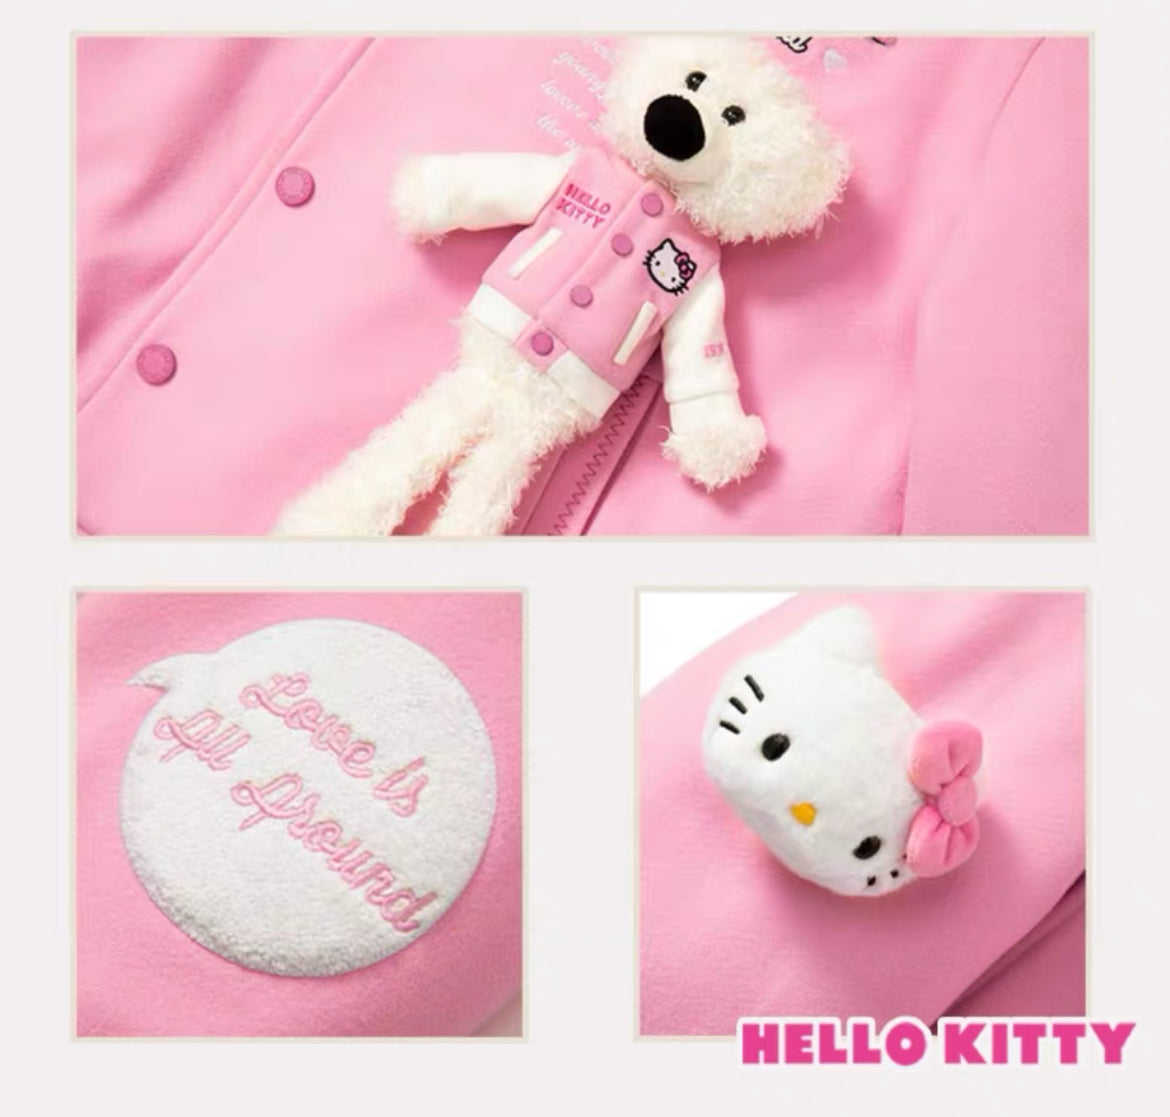 13DE MARZO Hello Kitty Bear Plaid Skirt Shocking Pink – Fixxshop